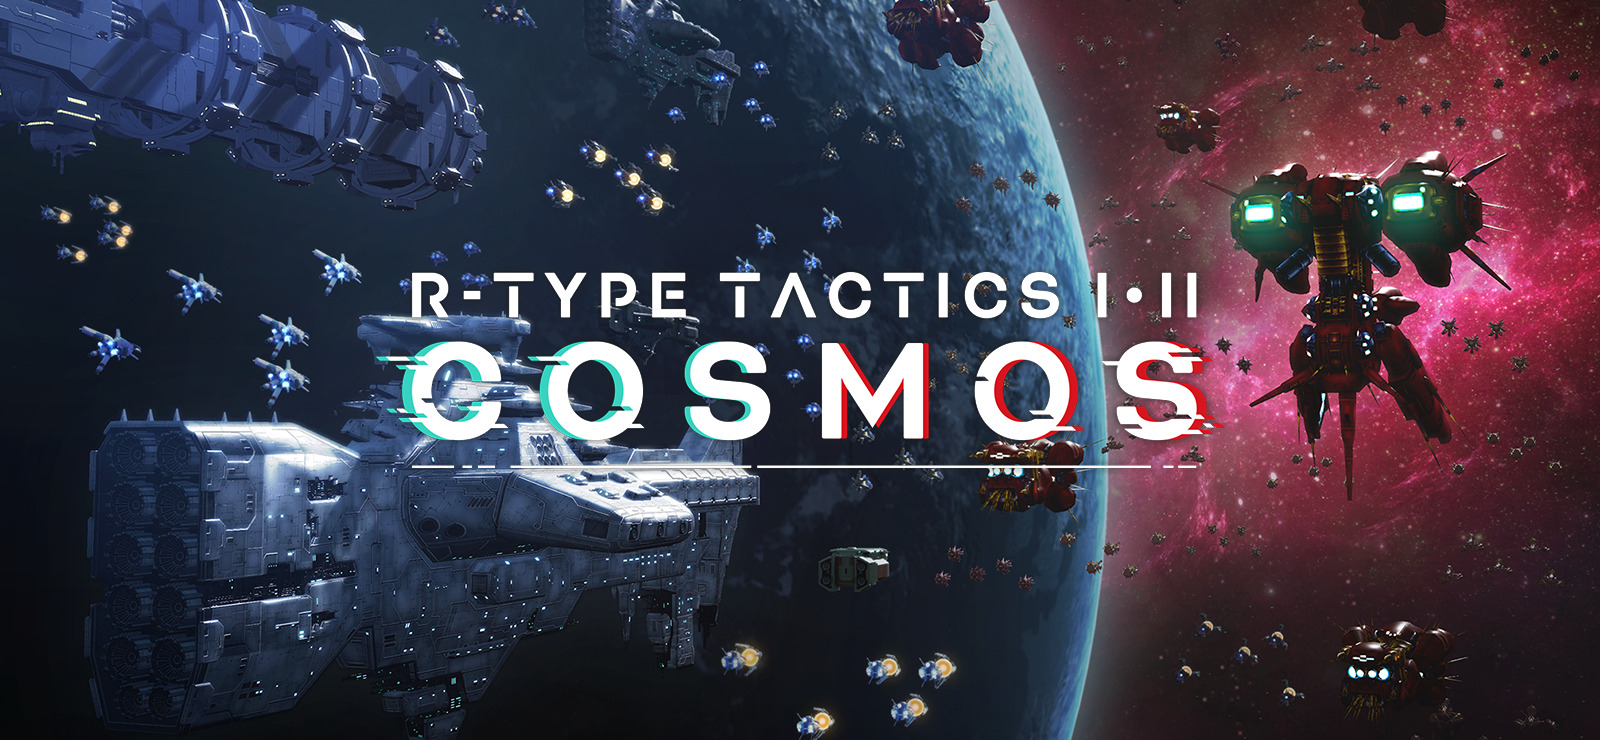 R-Type Tactics I • II Cosmos on GOG.com